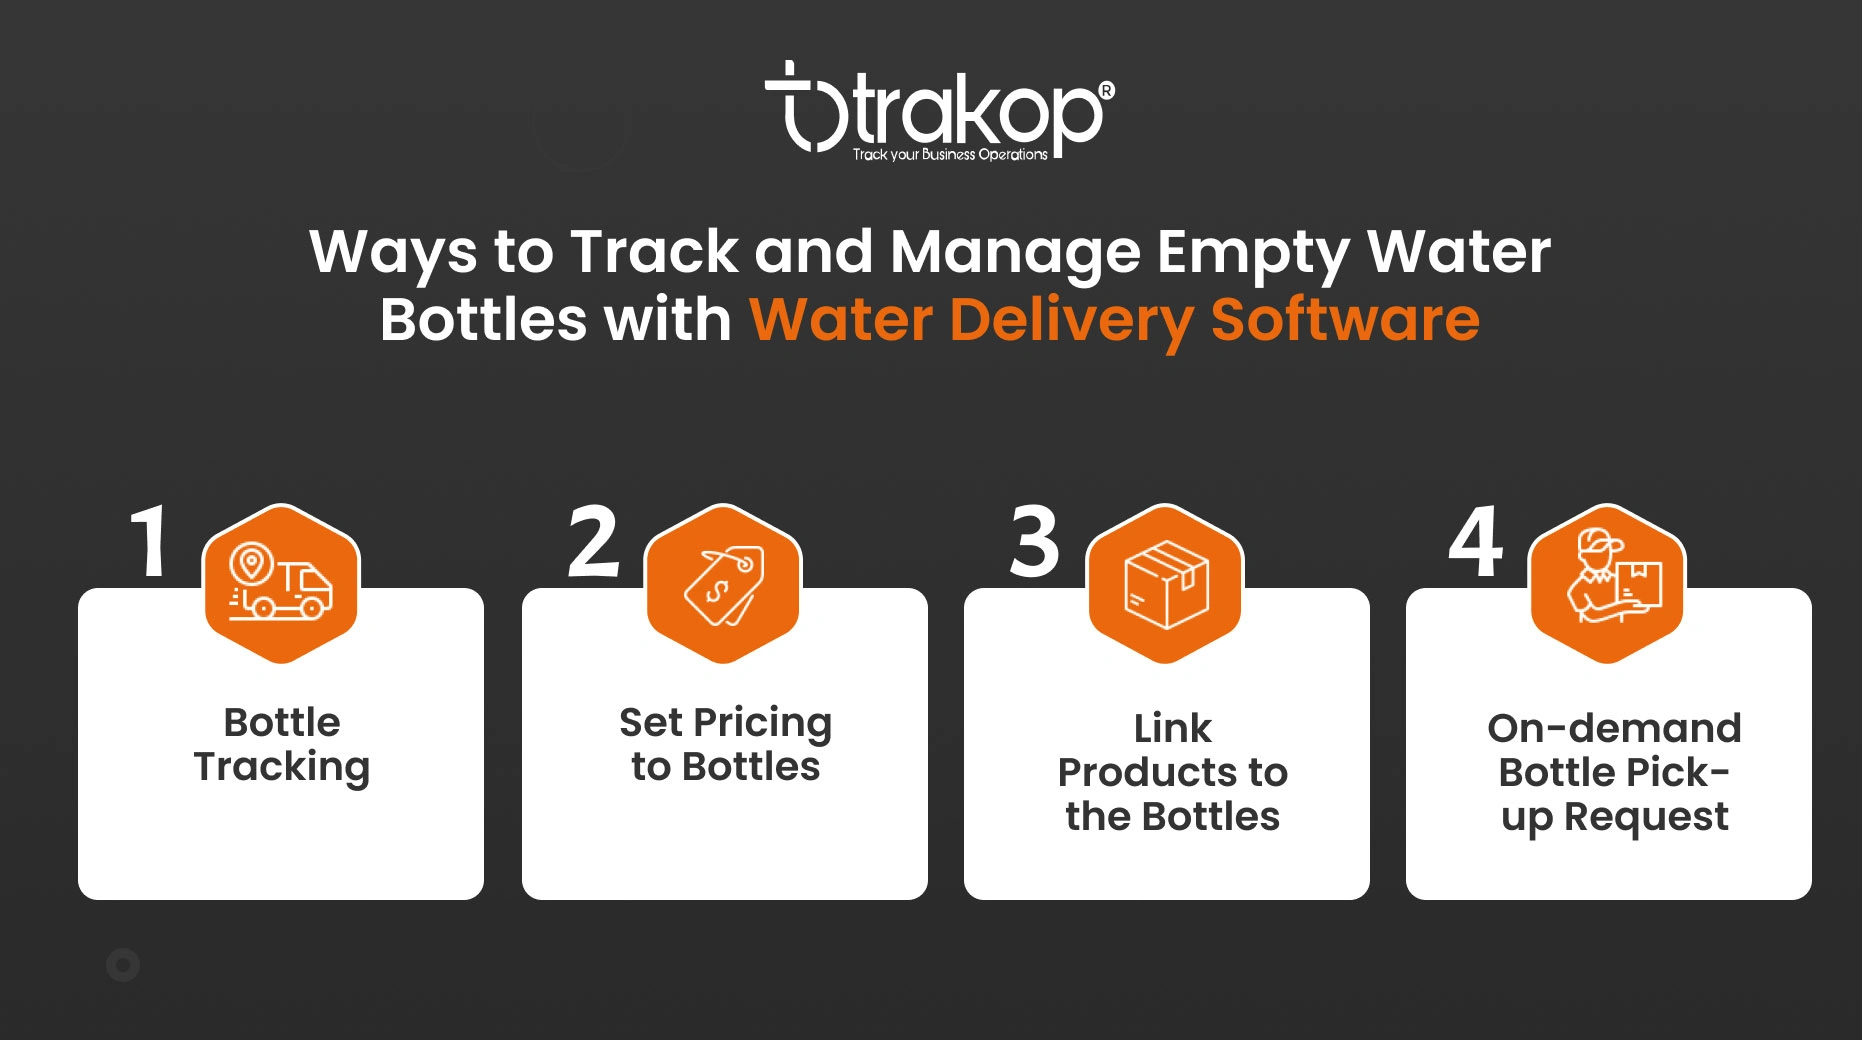 ravi garg, trakop, ways, empty water bottles, water delivery software, bottle tracking, set pricing, link product, bottle pickup